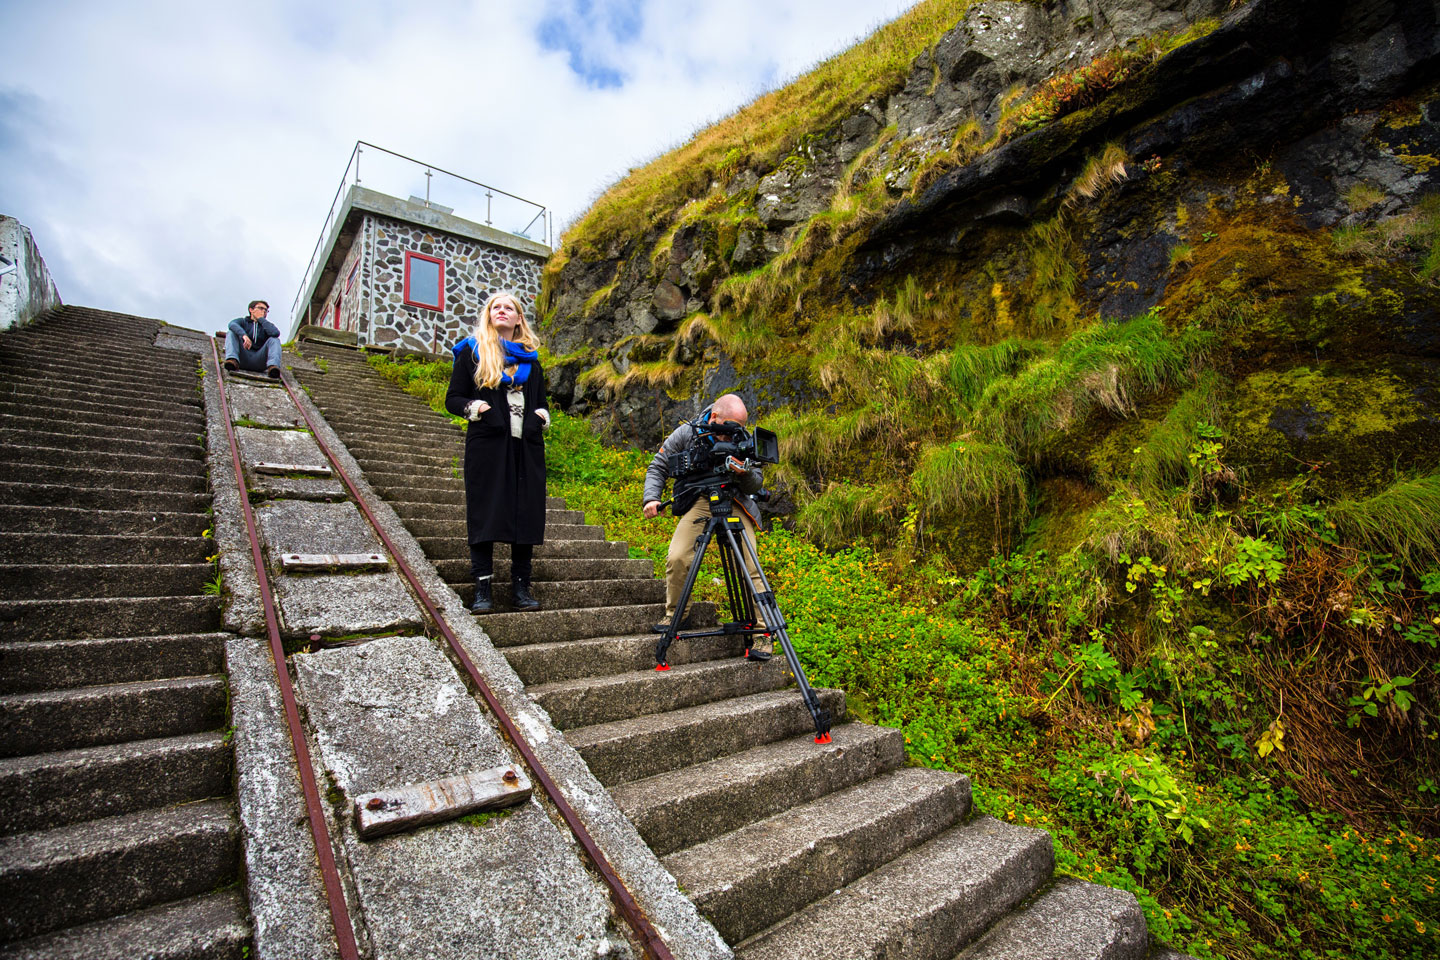 Filming on staircase Faroe Islands